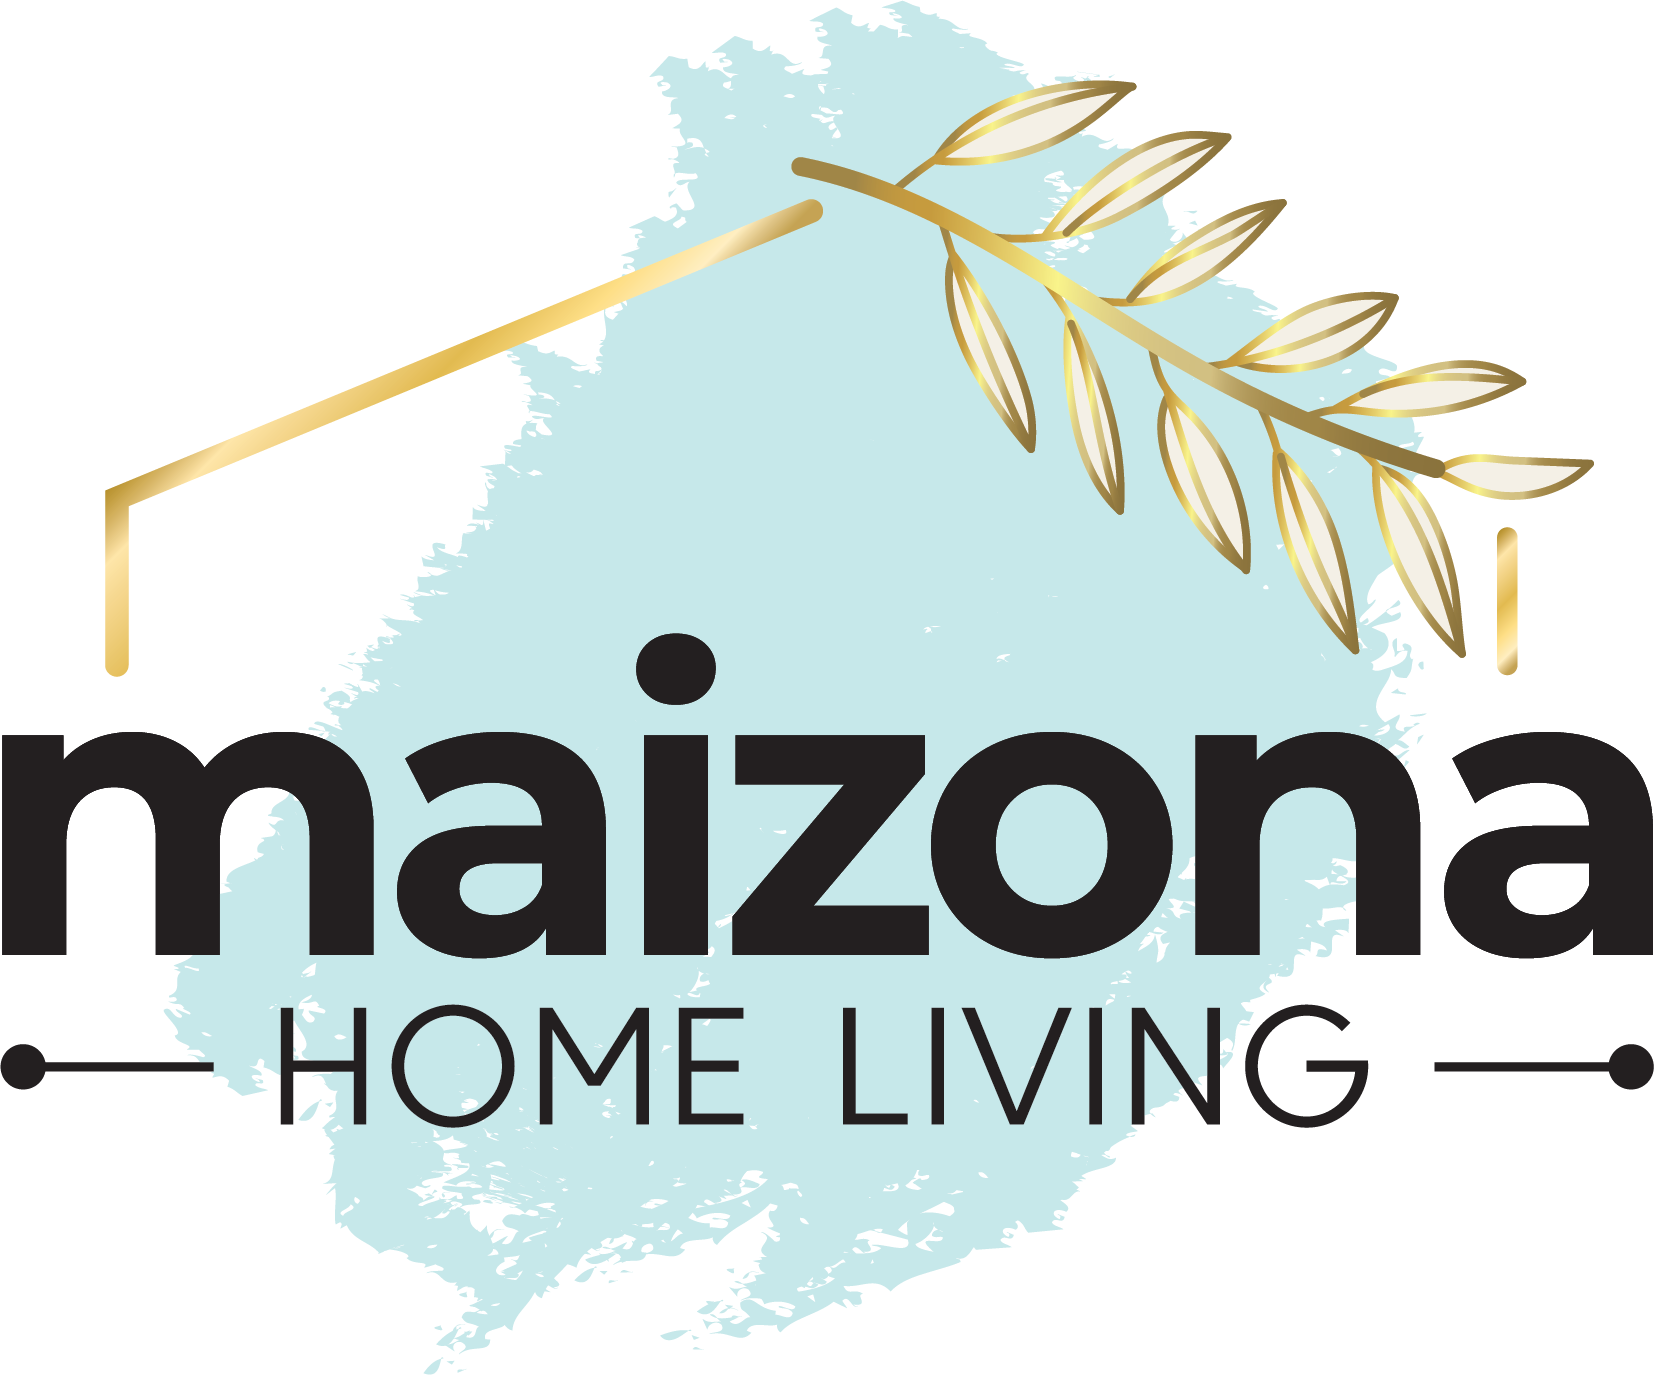 Maizona Home living